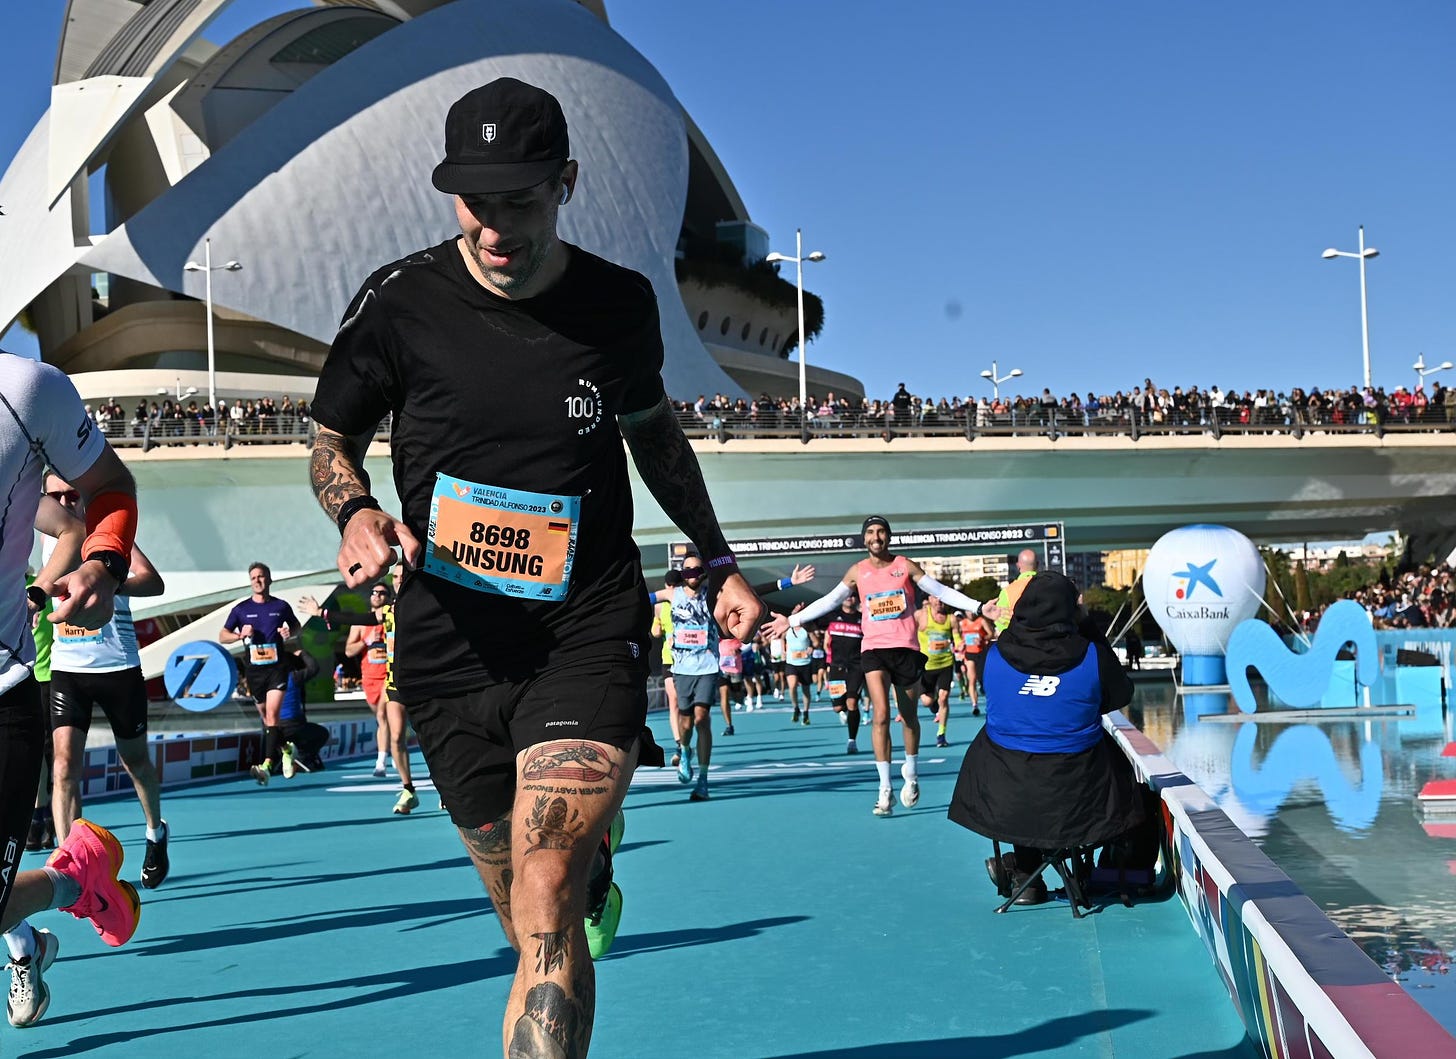 The author racing towards the finish line of the Valencia Marathon